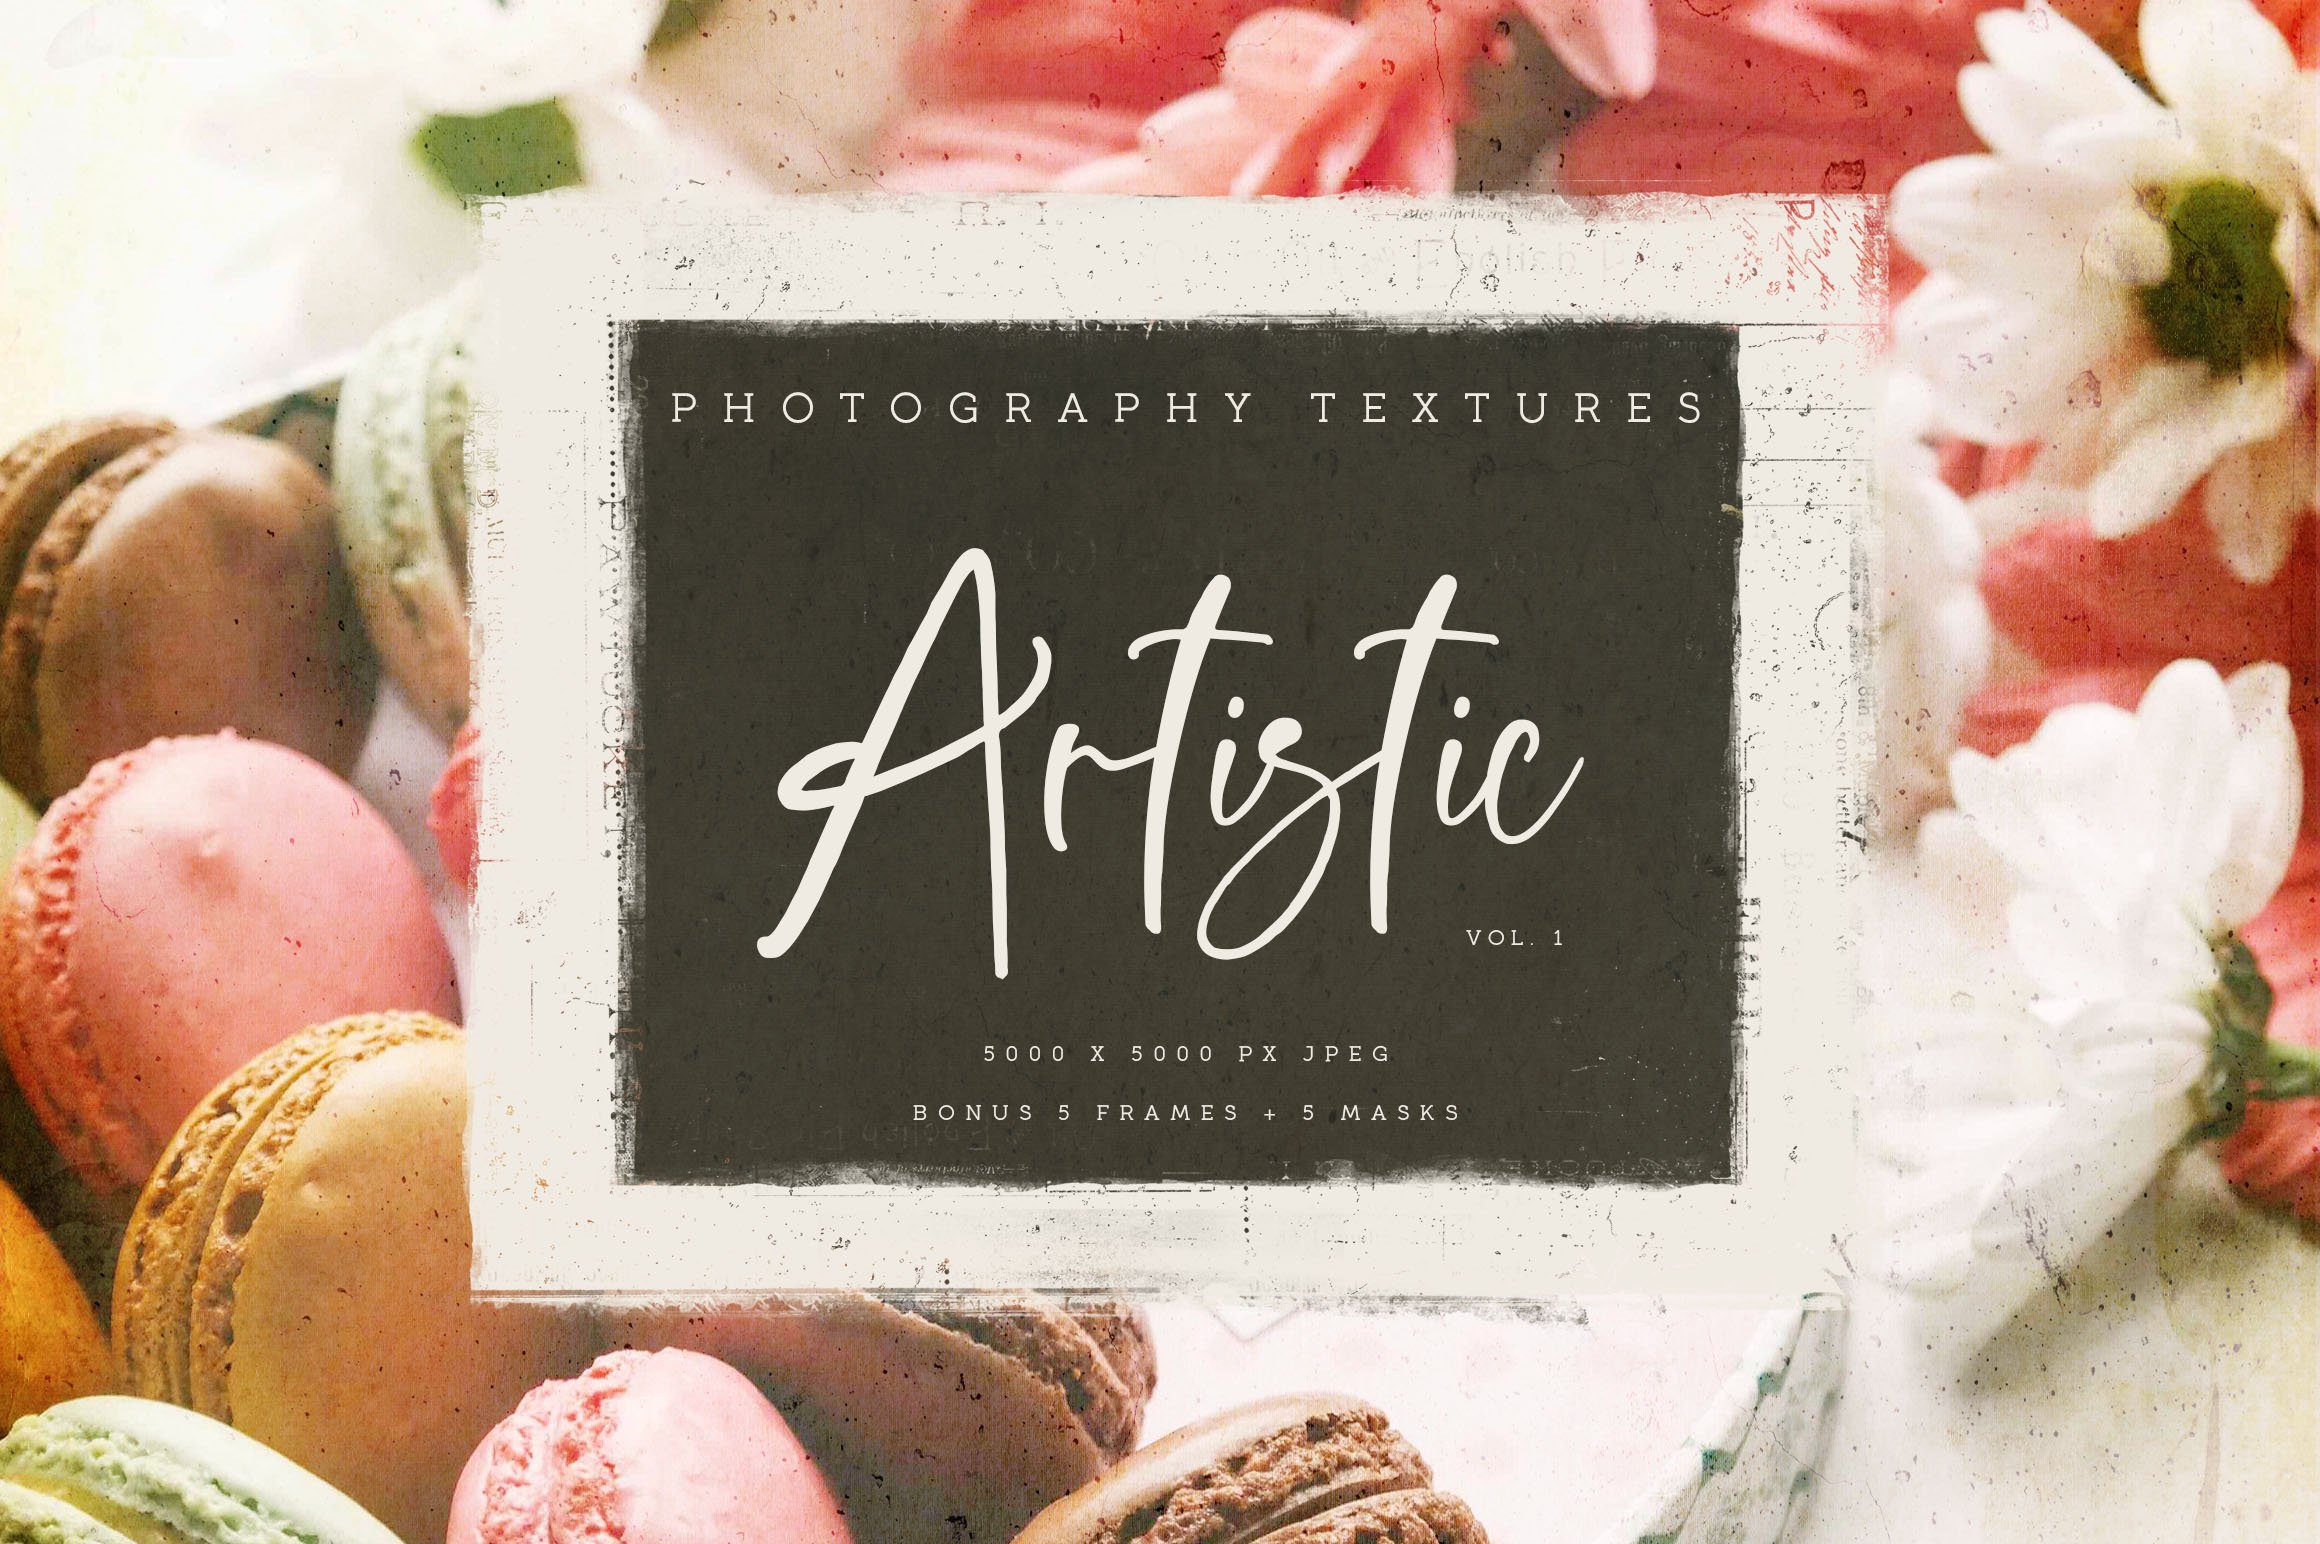 Photography Texture - Artistic Vol. 1